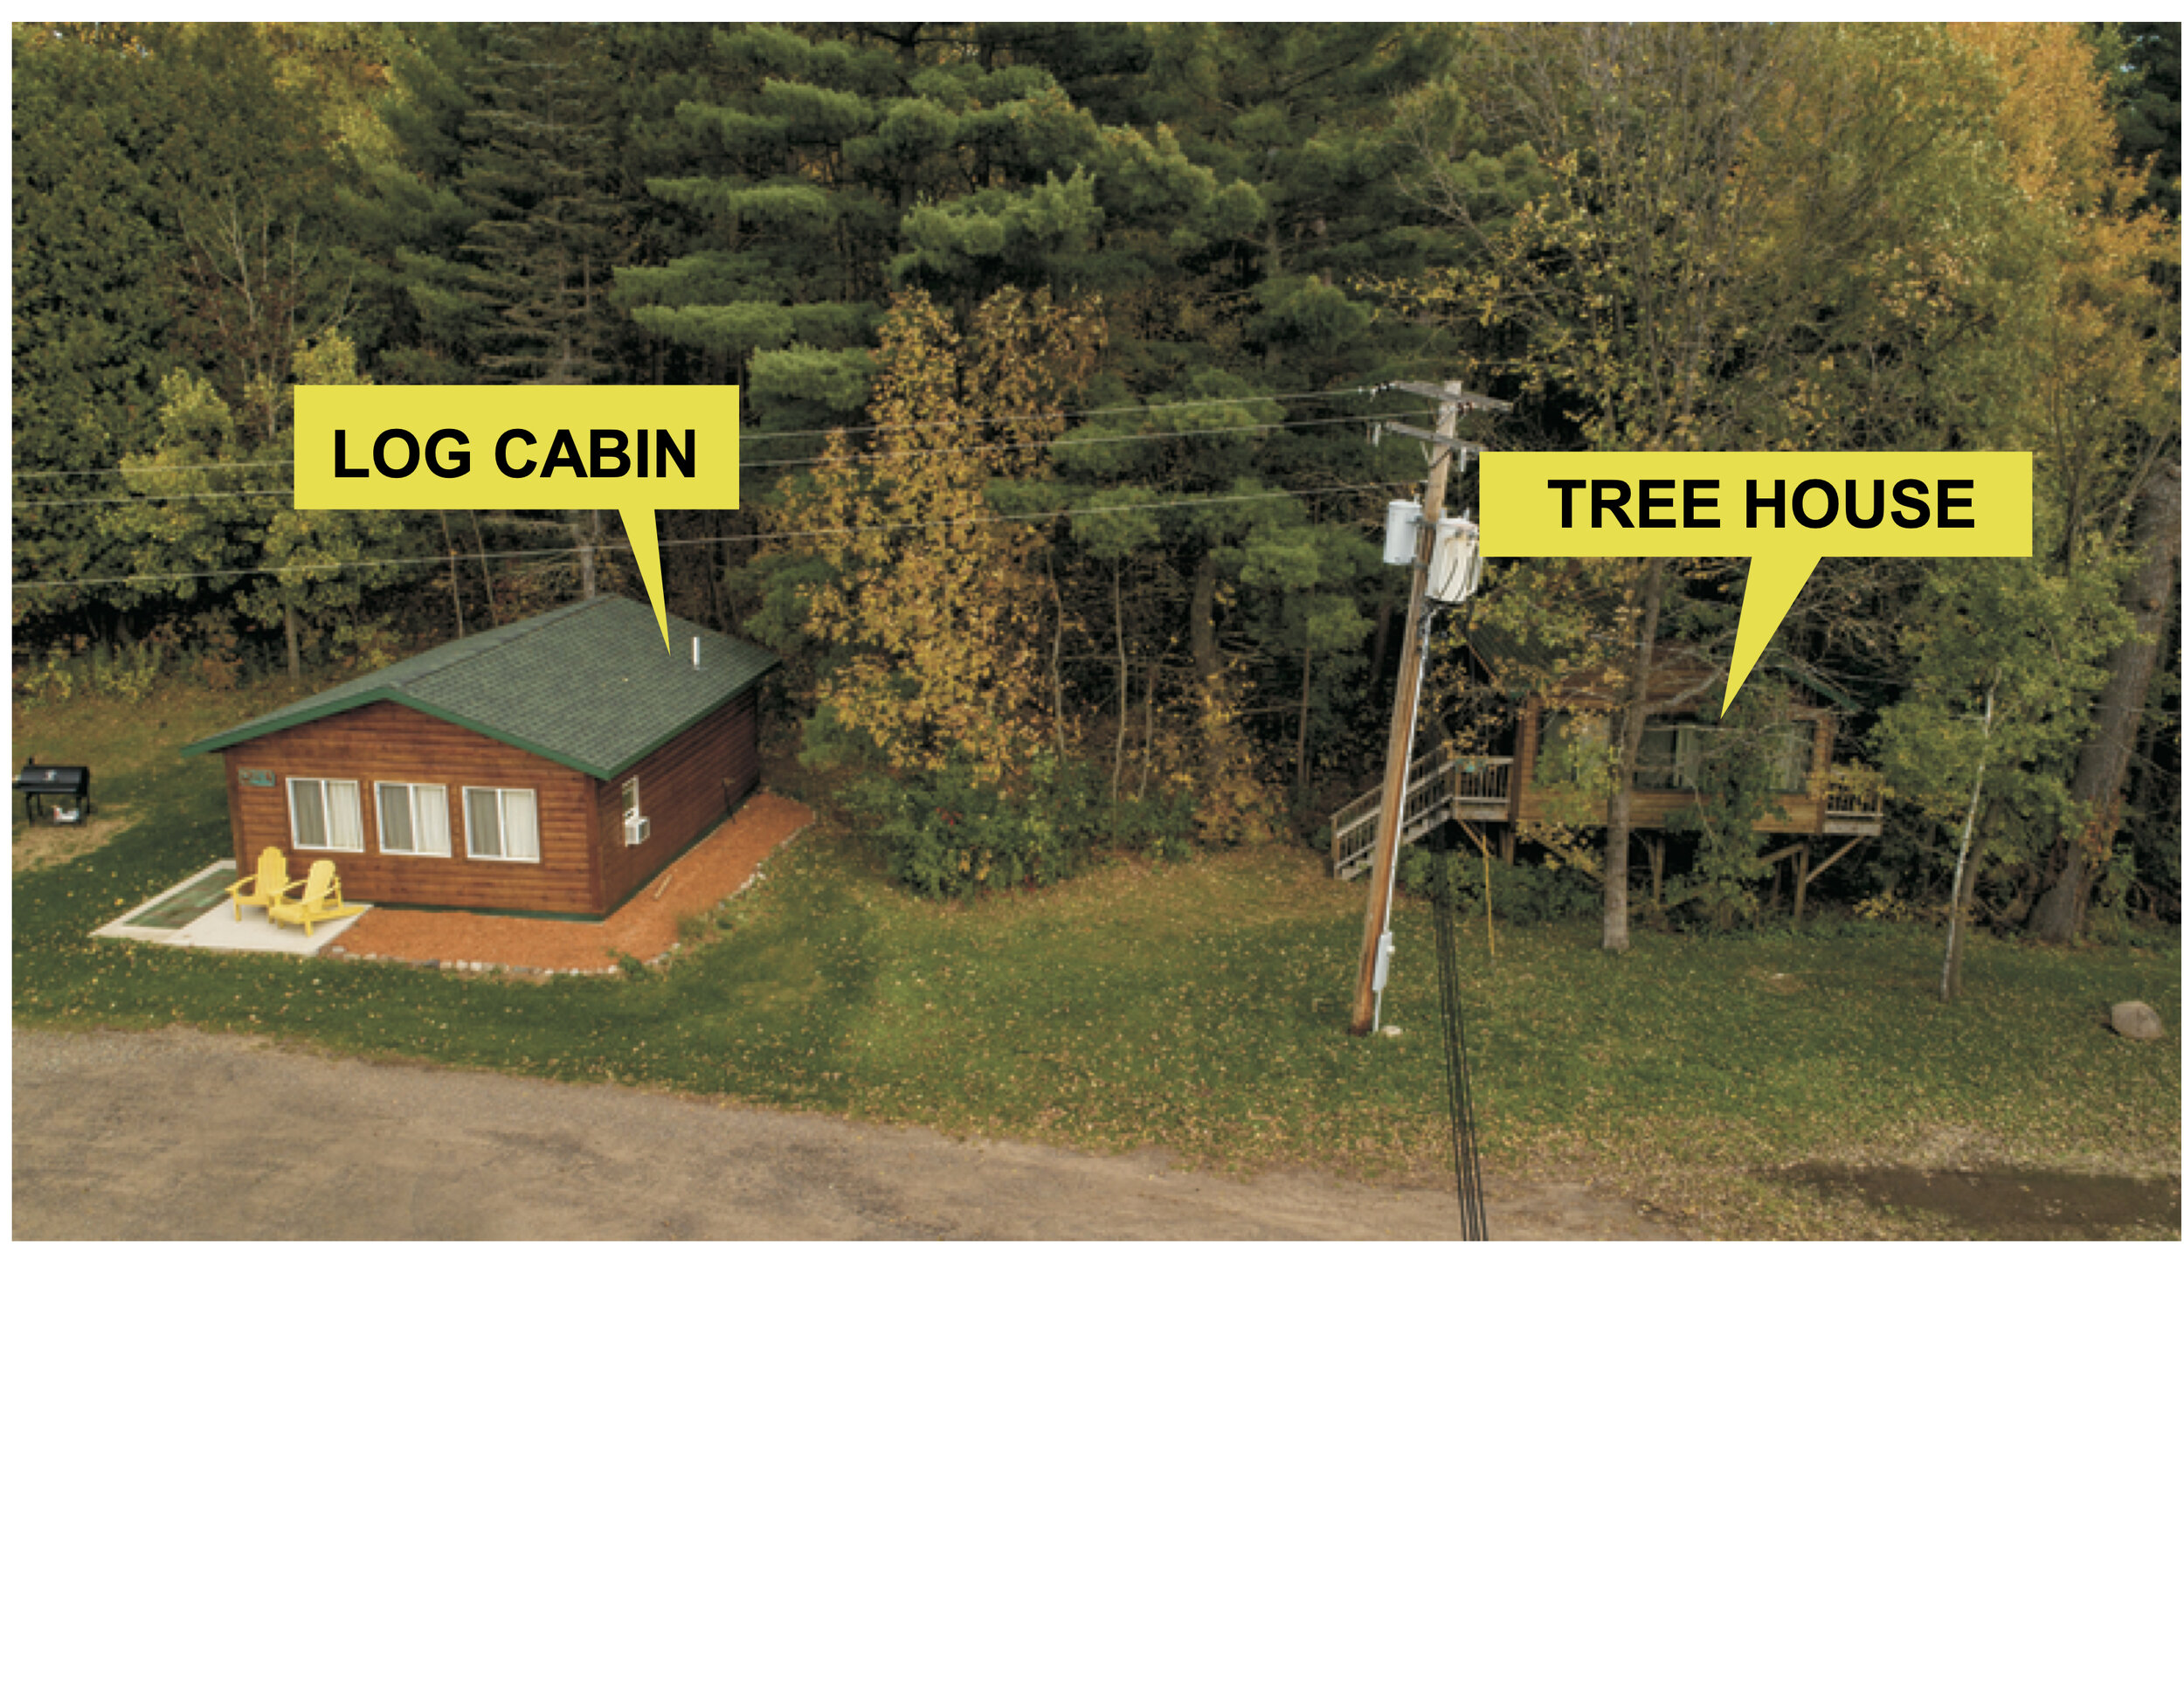 Log Cabin and Tree House.jpg